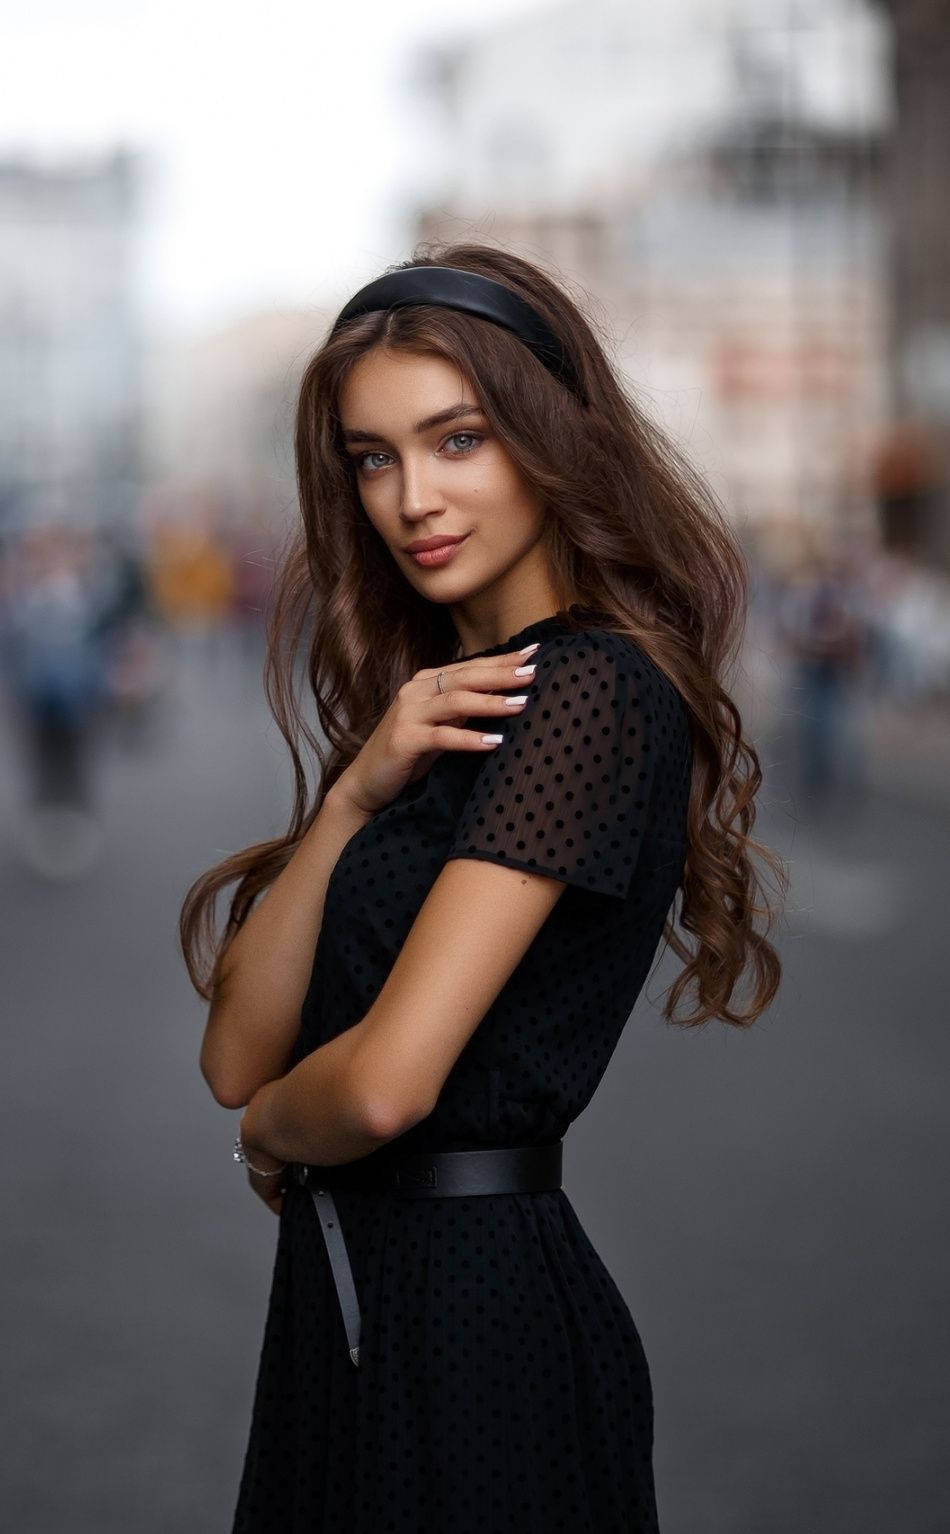 Female Model In Black Woven Dress Wallpaper